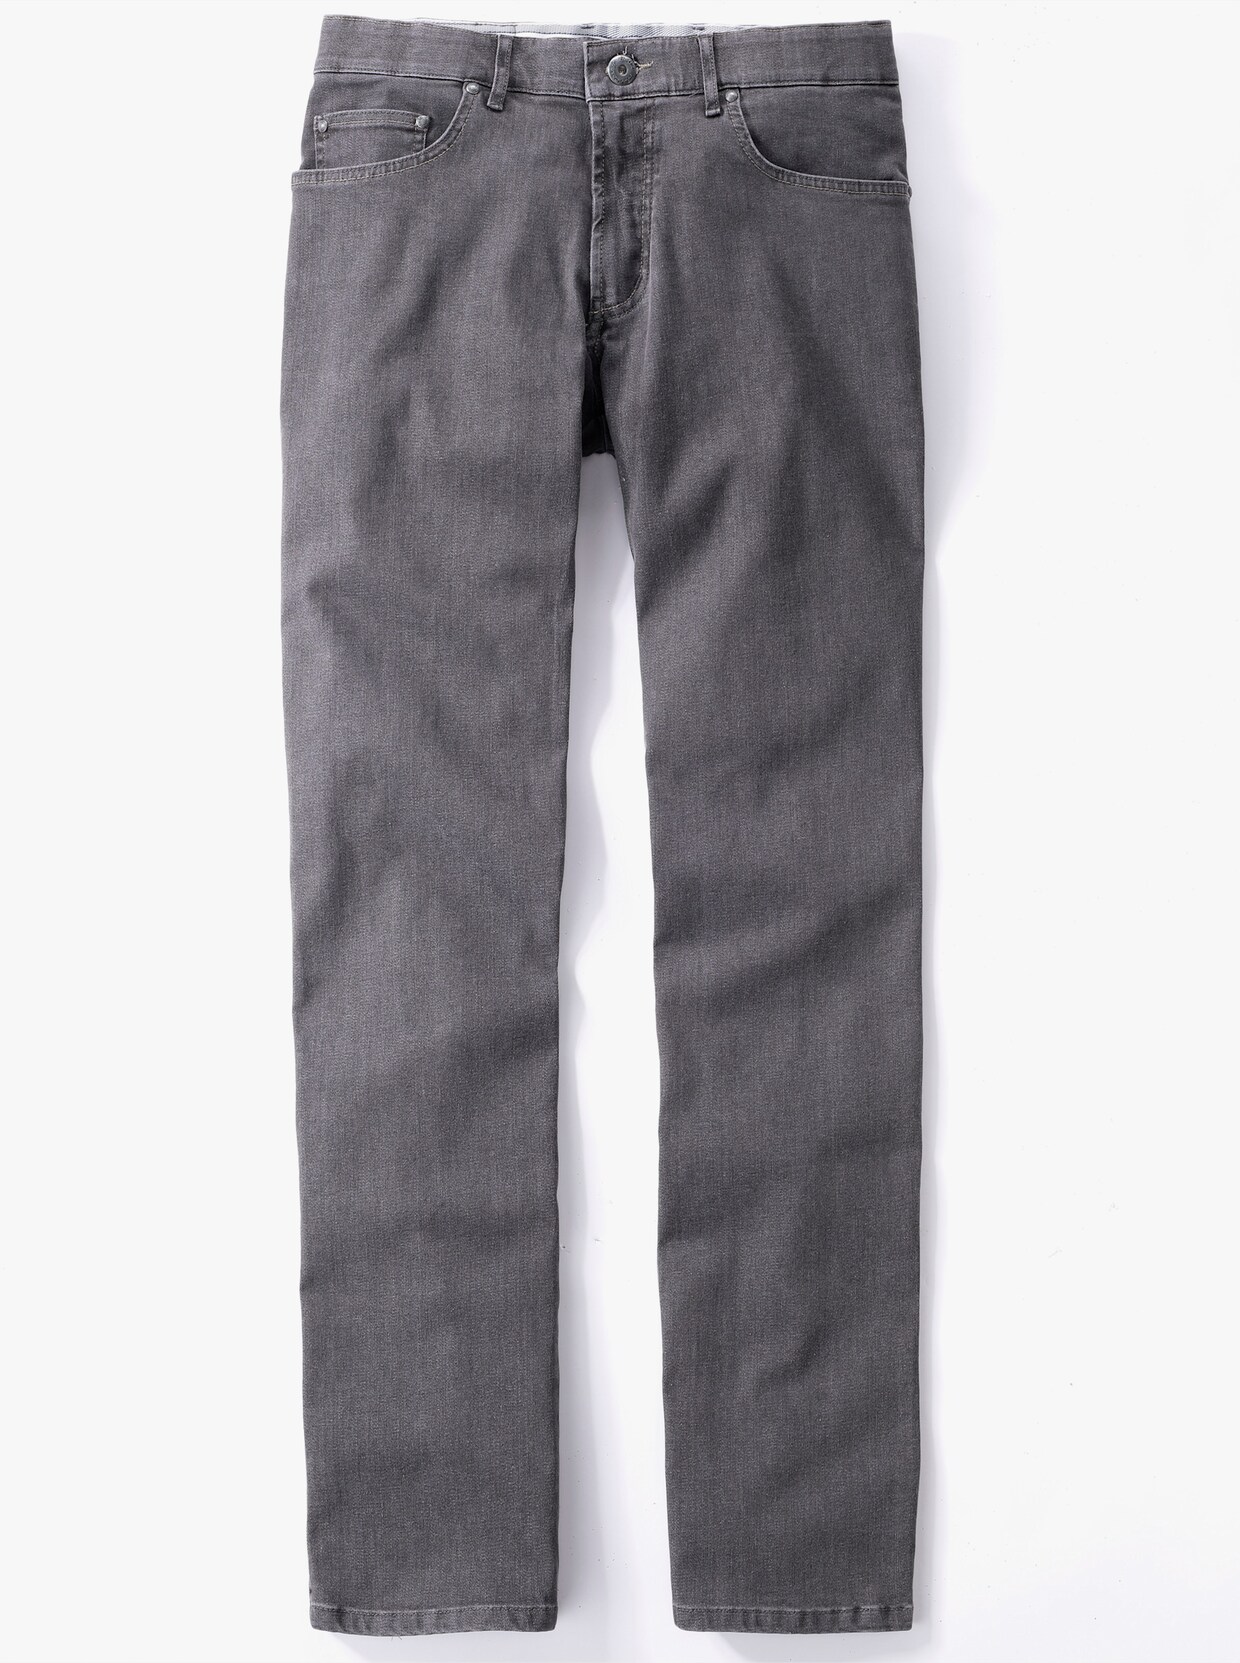 Marco Donati Jeans - grey denim